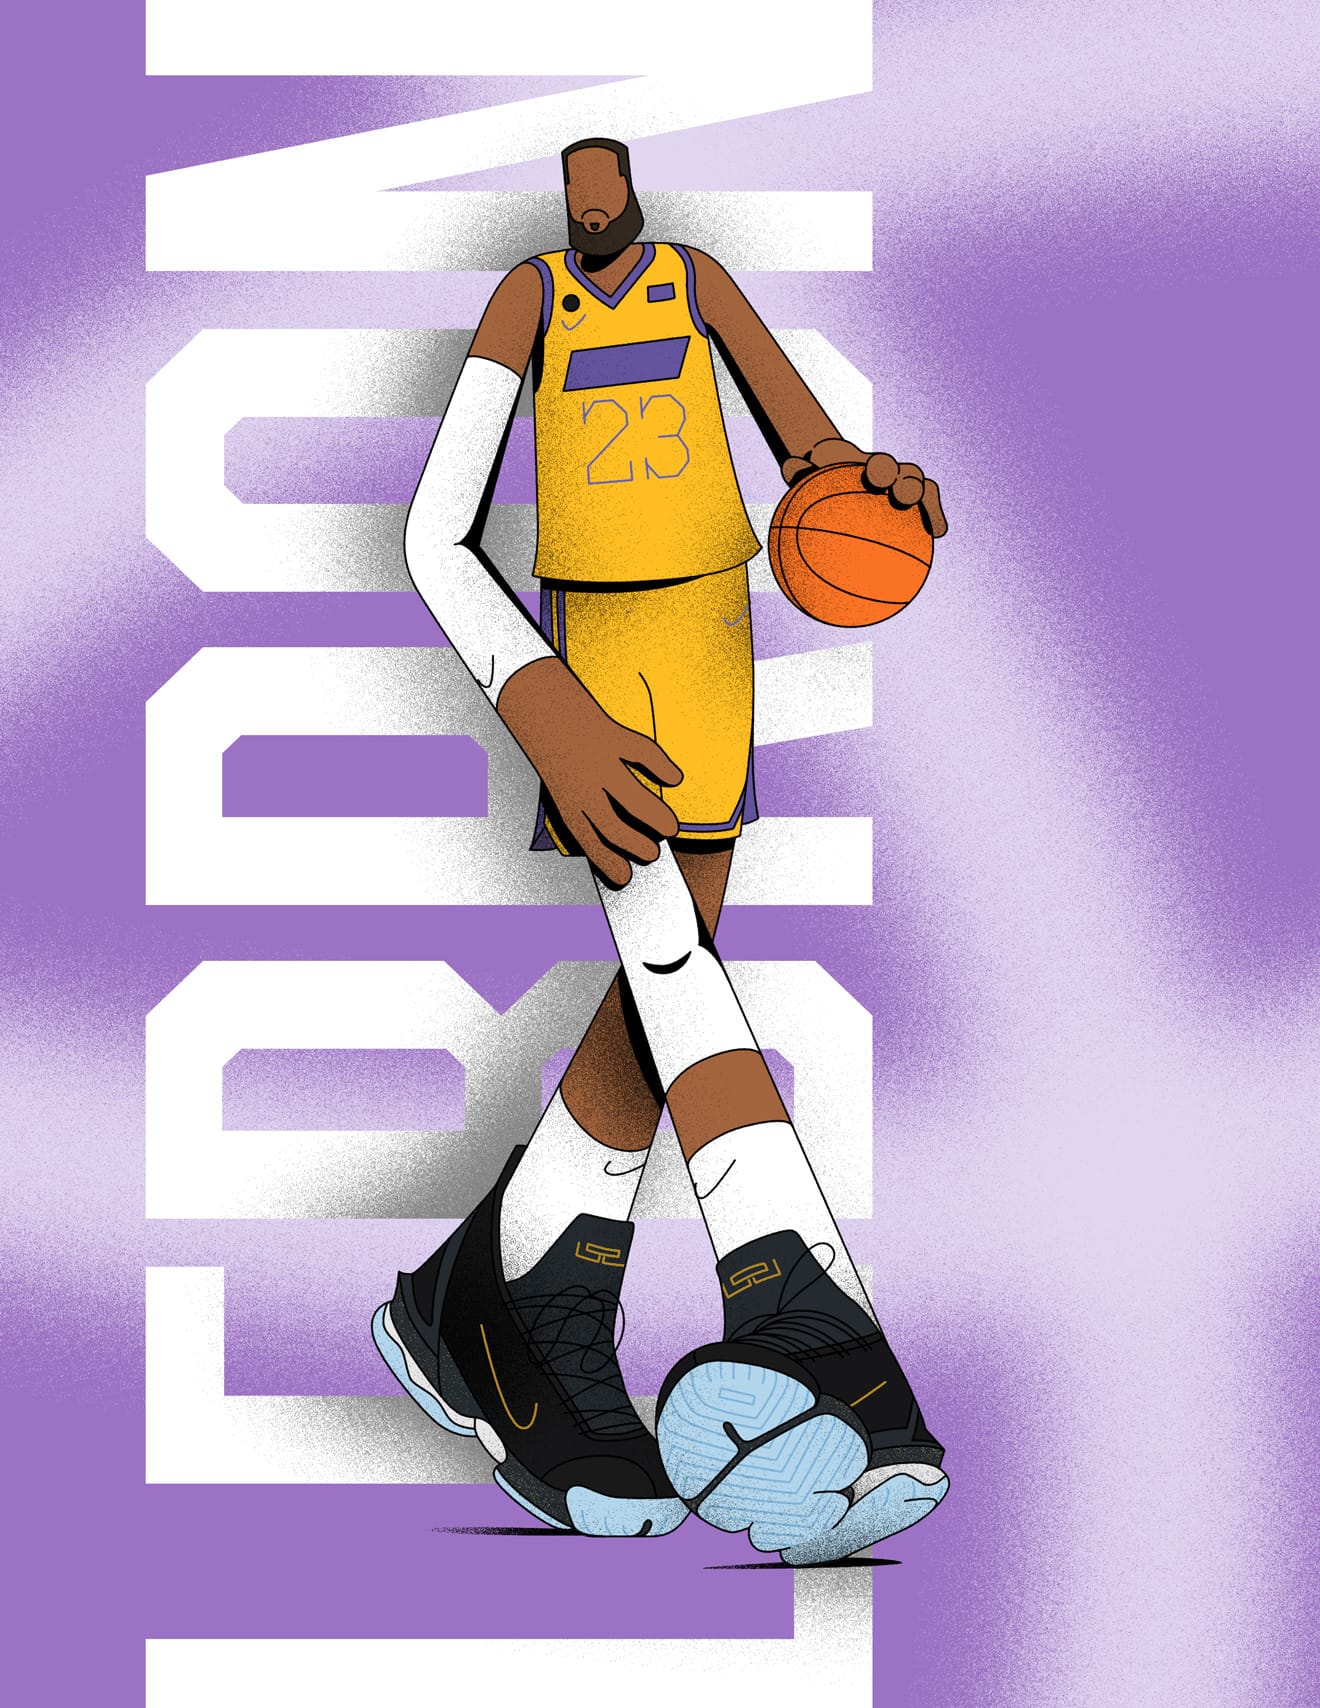 Illustration of basketball player, LeBron James, mid-dunk